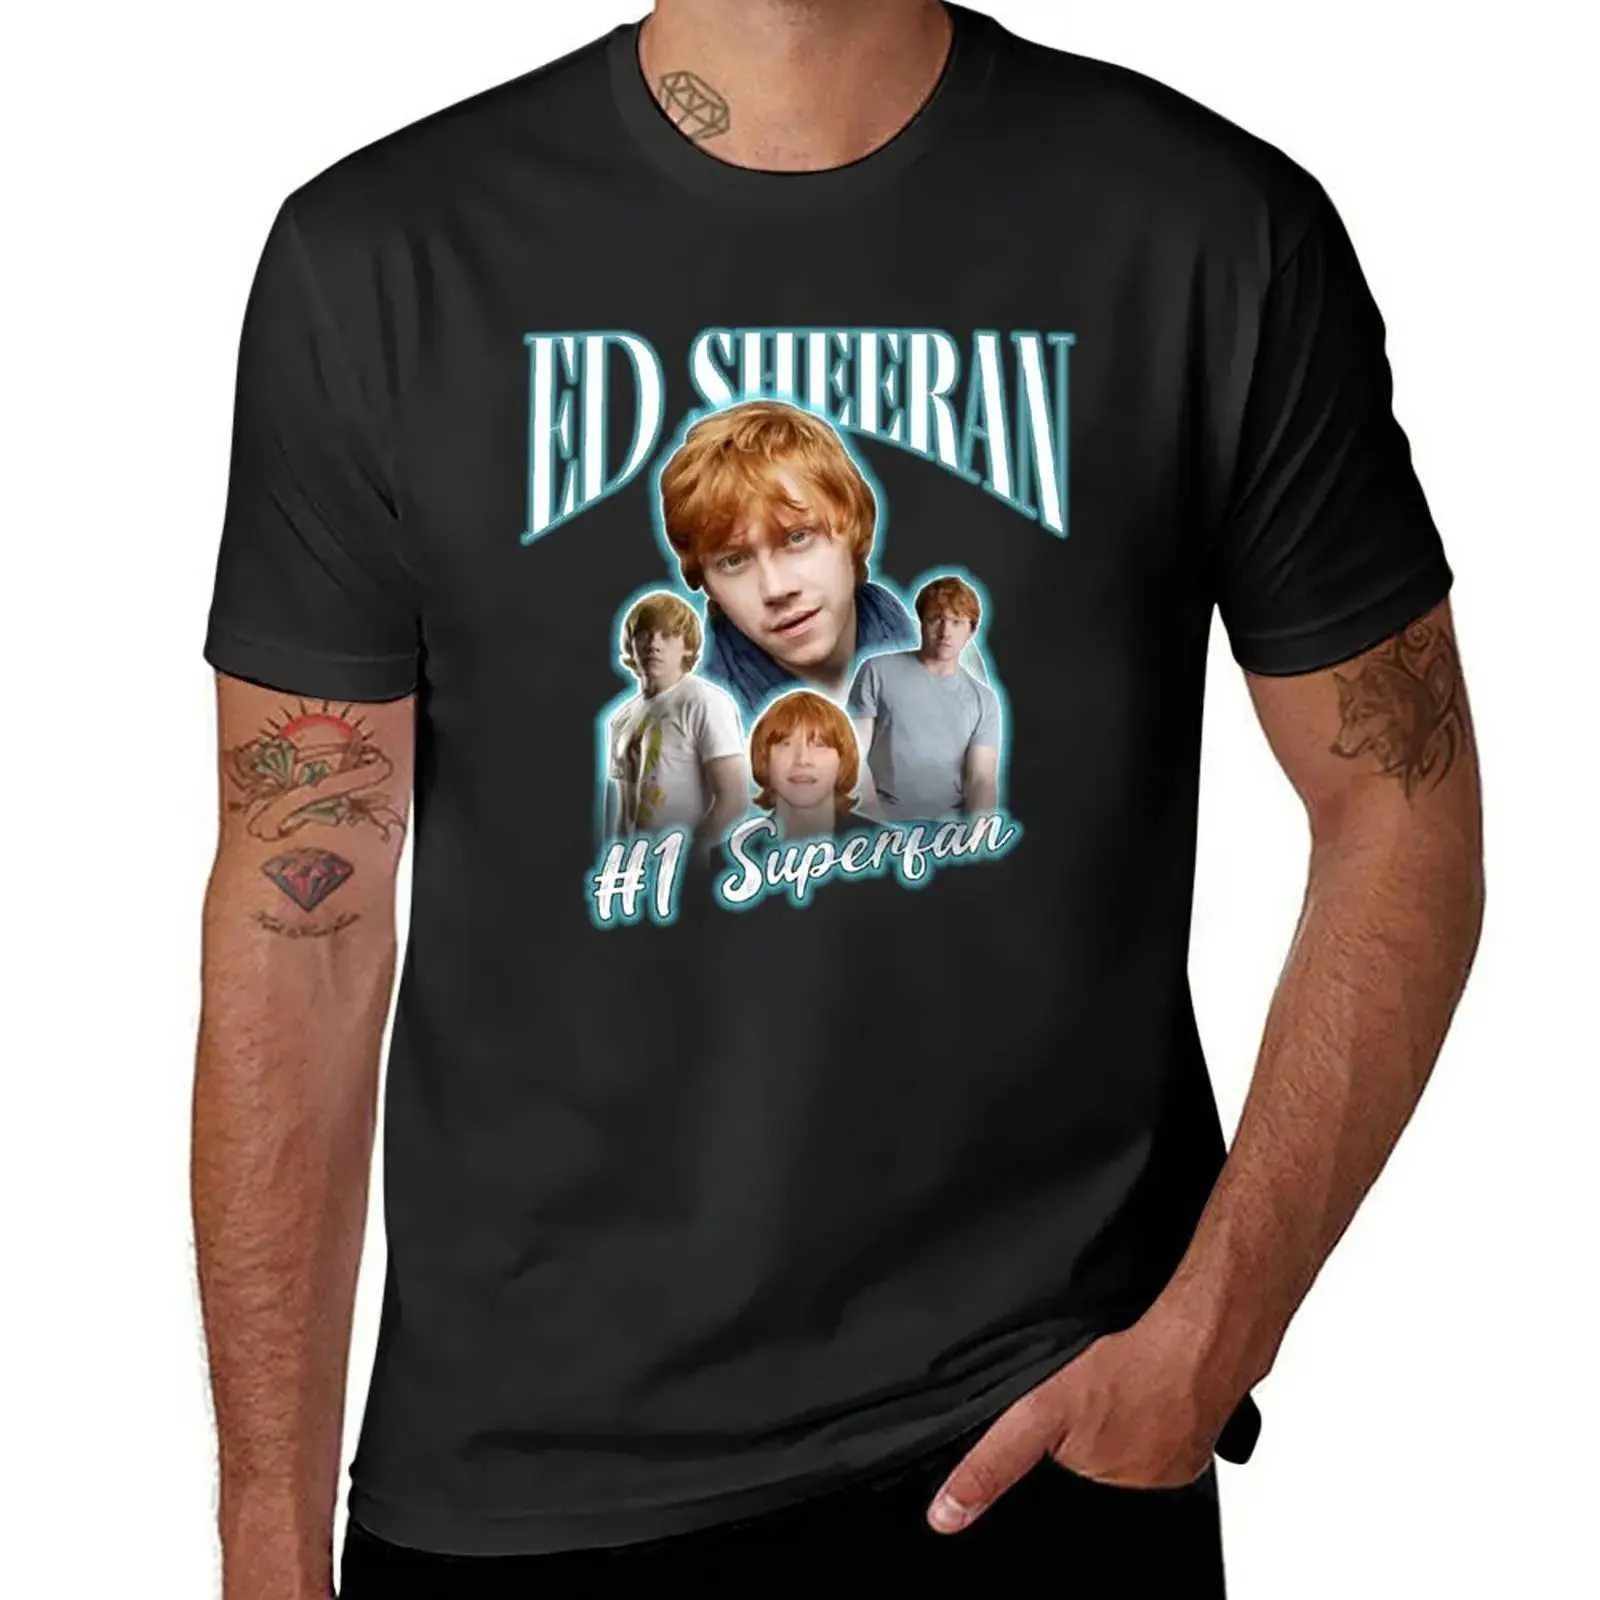 T -shirt maschile New All Star - I Love Ed Sheeran - T -shirt per maschi taglie forti Abiti vintage abiti da uomo semplici da uomo vestiti da uomo.